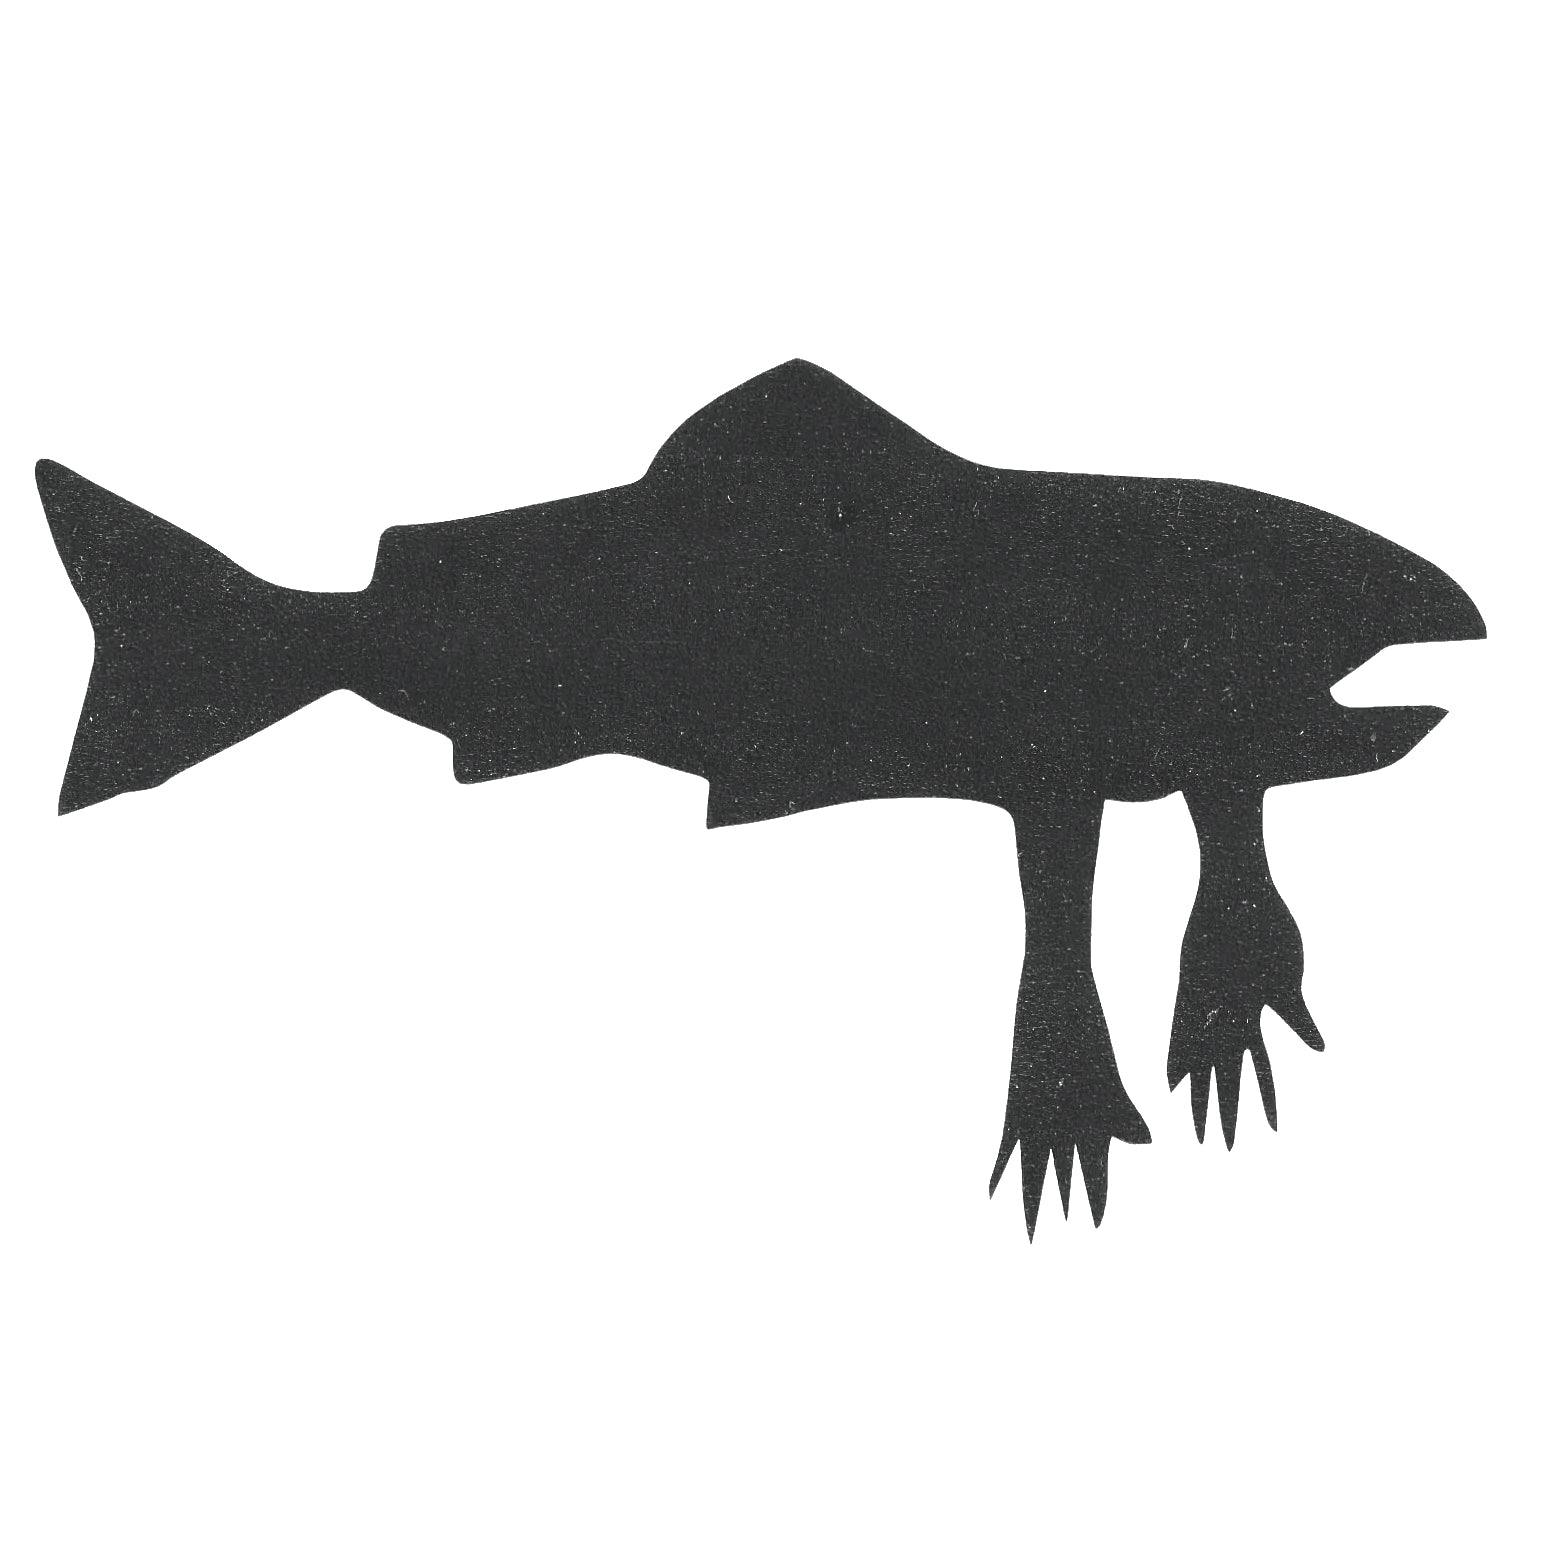 Black Die-Cut Salmon Arms Sticker